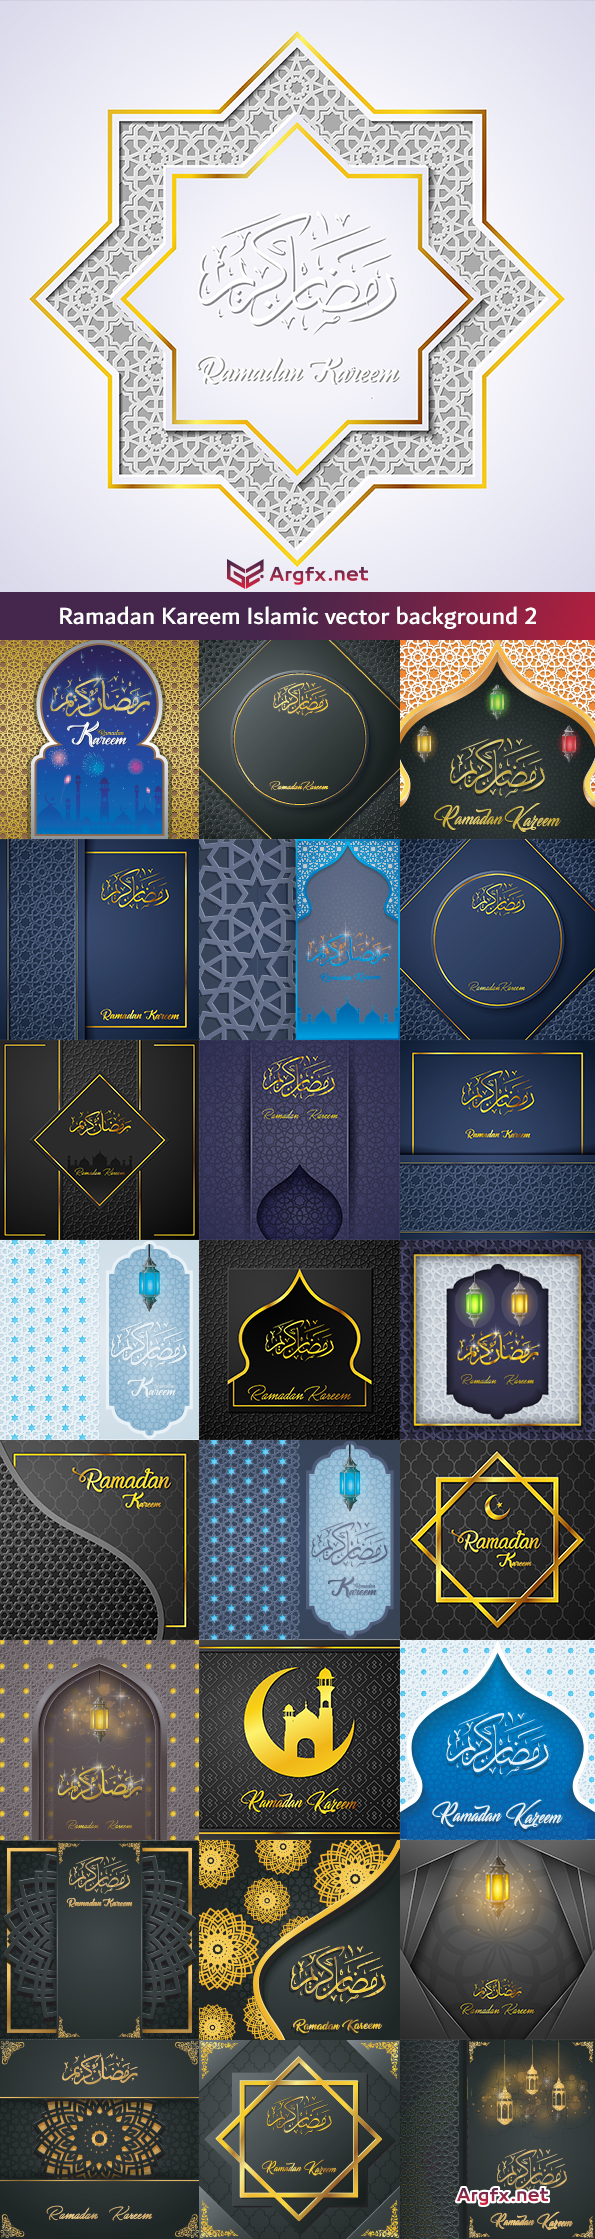 Eid mubarak greeting cards and Ramadan Kareem Islamic vector background 2